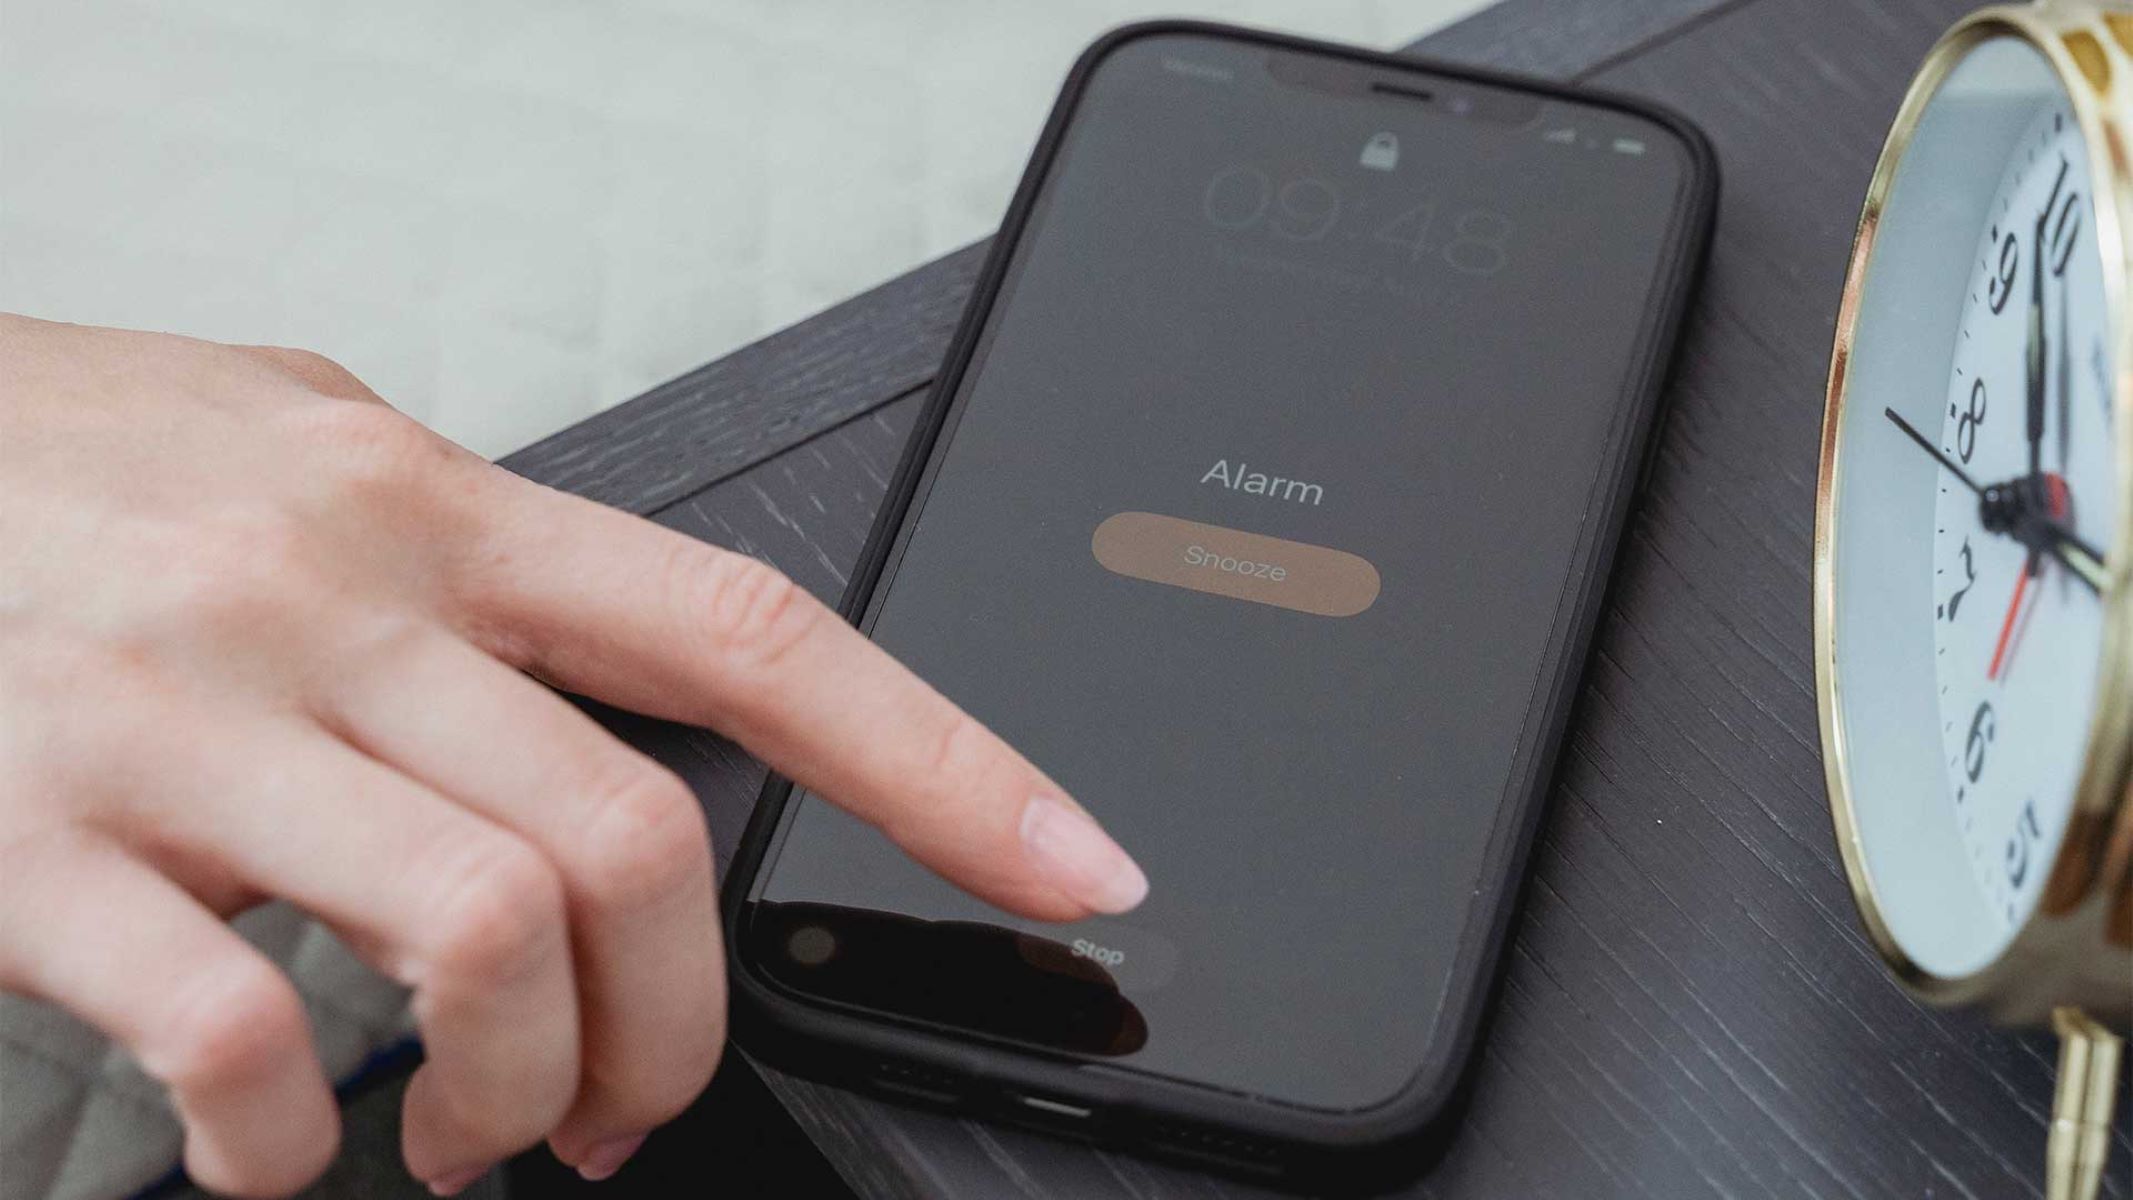 Surprising IPhone Alarm Hack: Do Not Disturb Mode Won't Stop It!